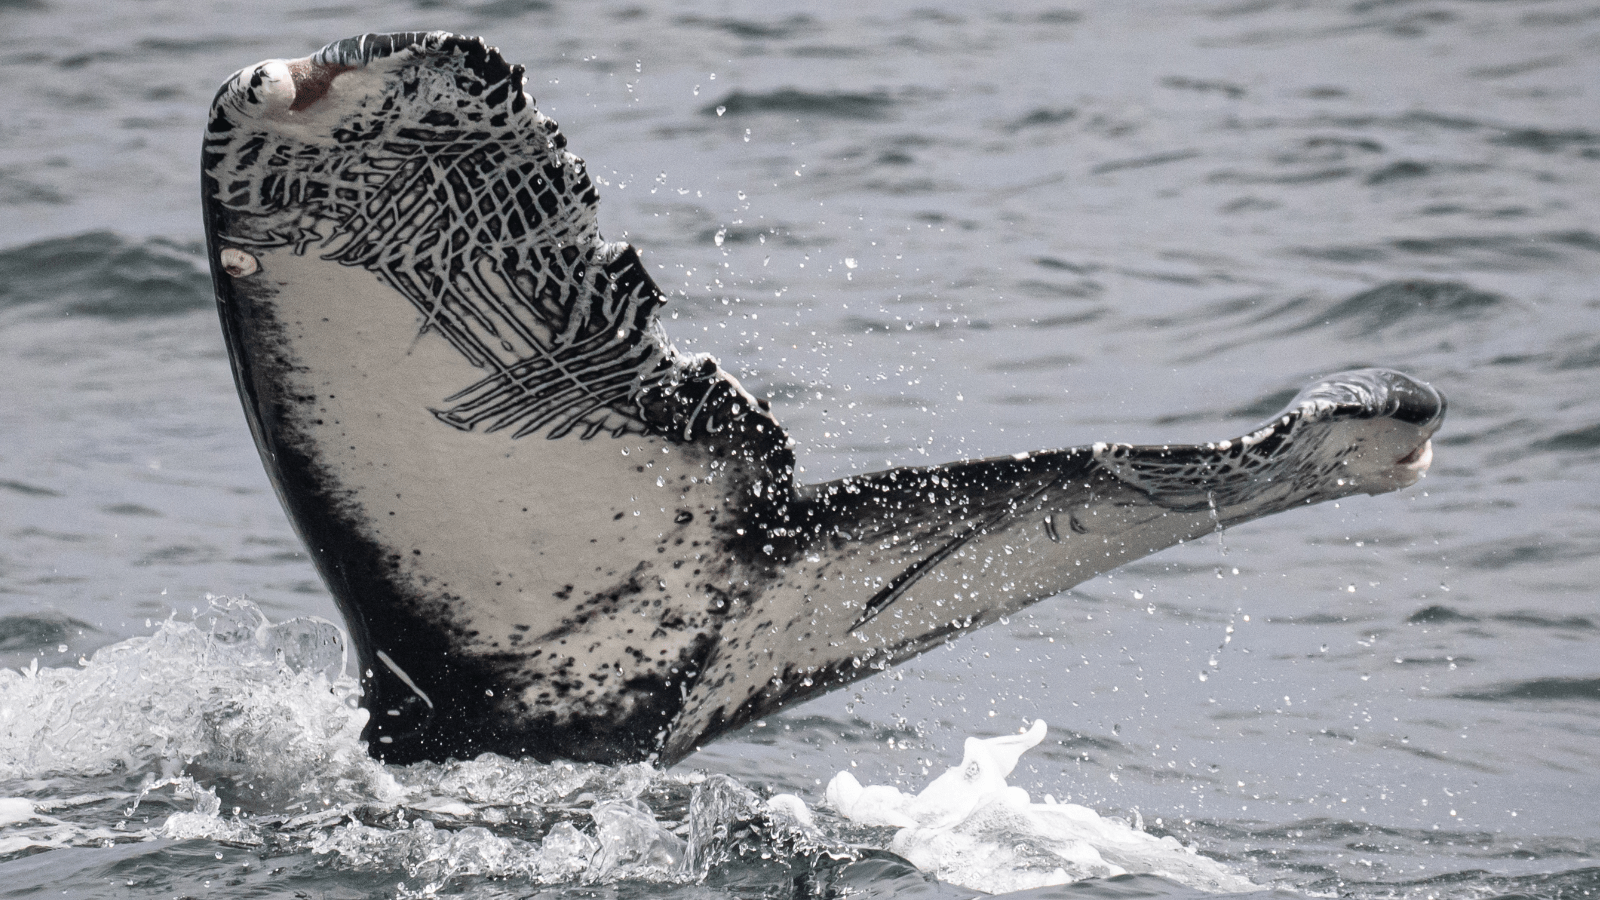 do_whale watching_humpback tail _800x450_Daniel Bianchetta _ Monterey Bay Whale Watch